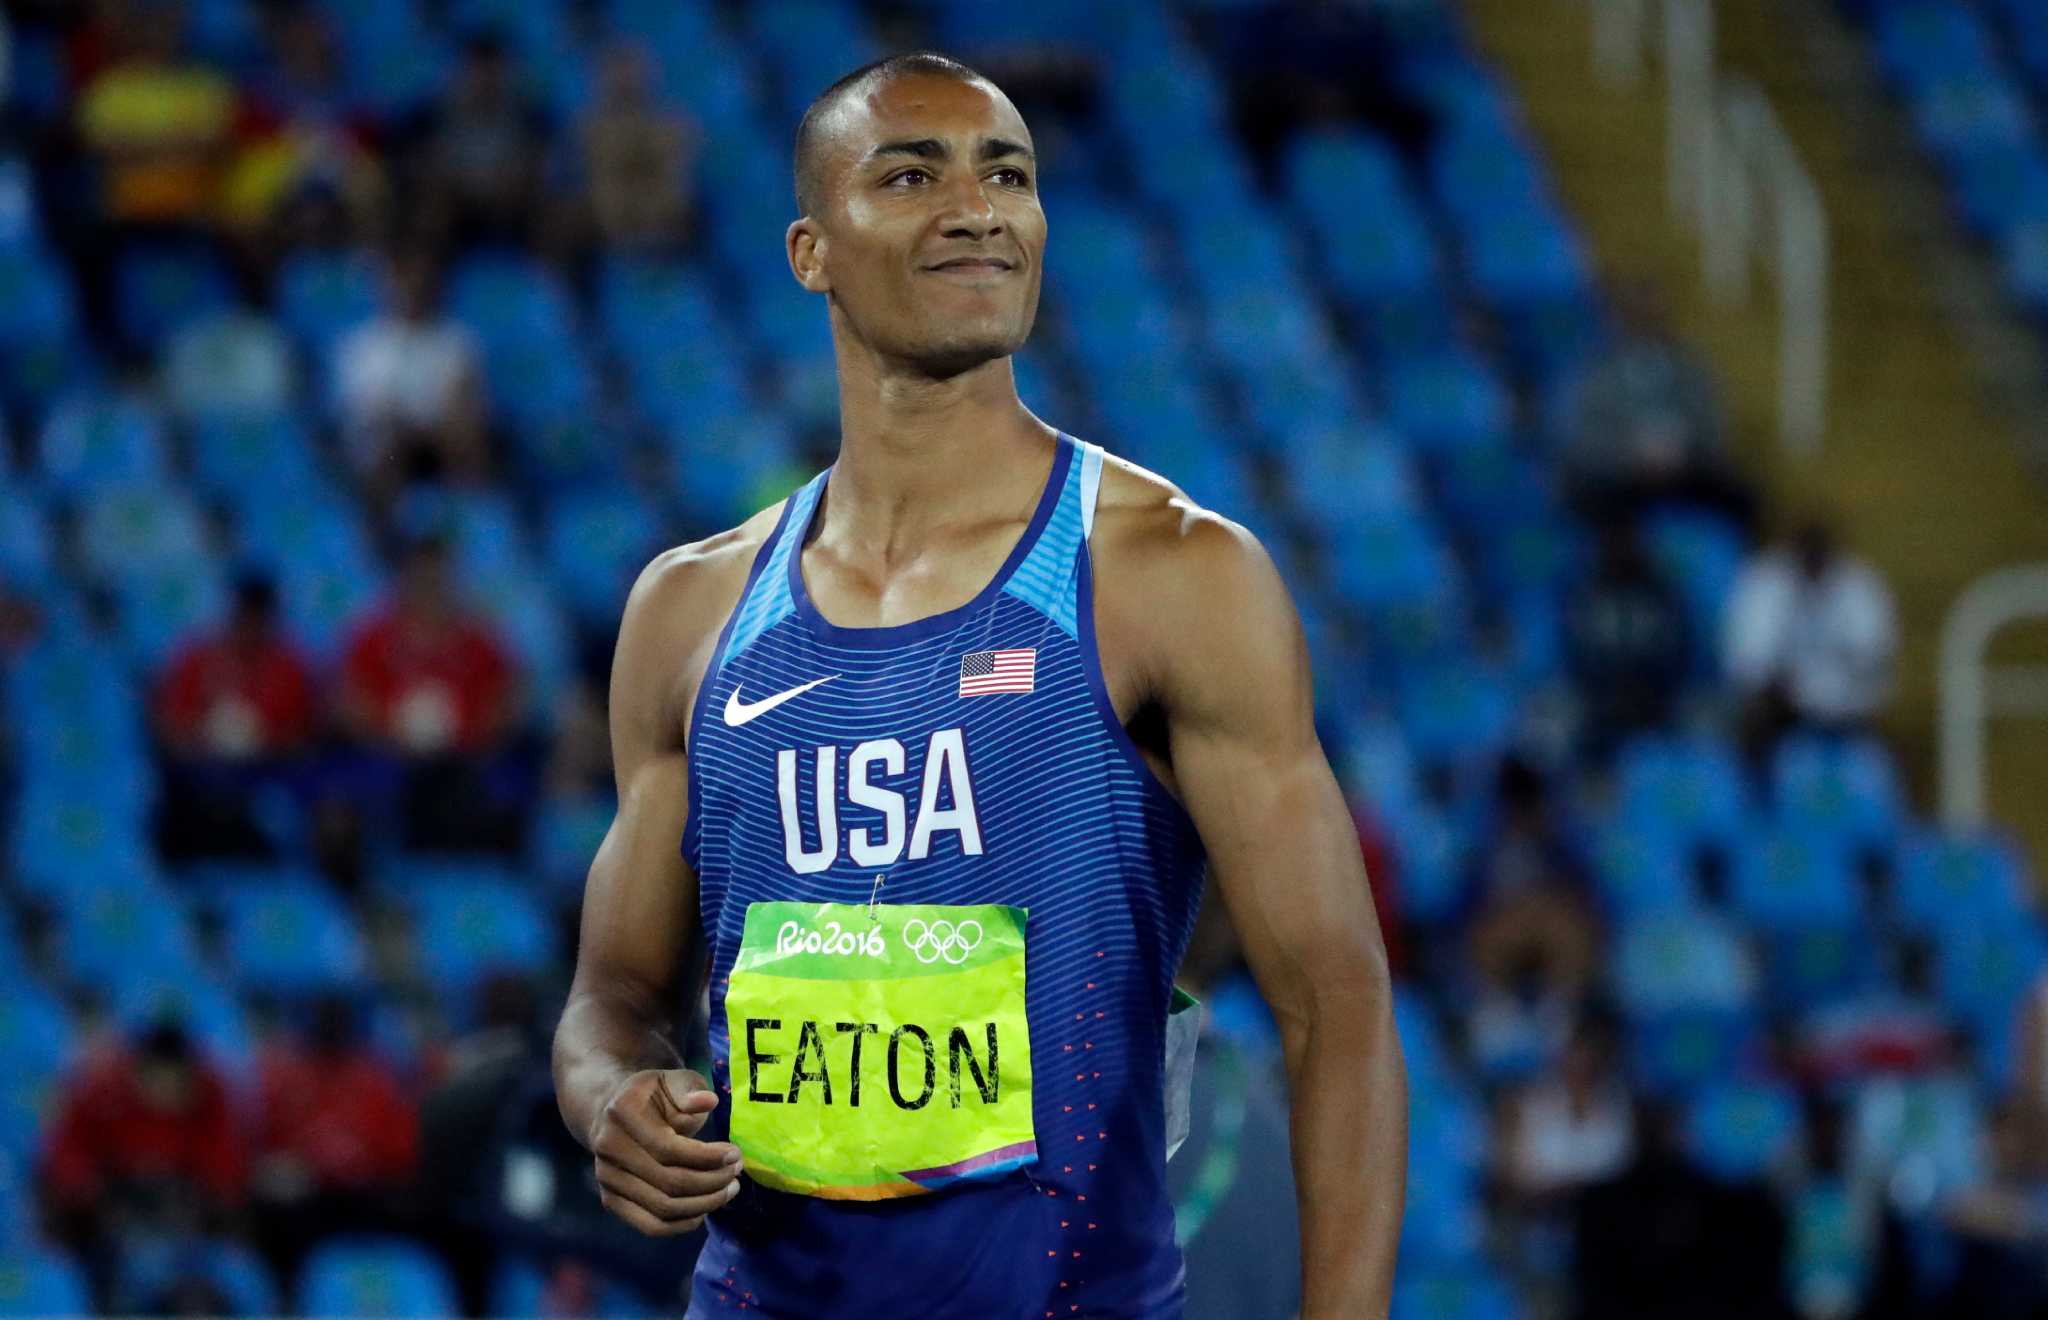 2016 olympic decathlon champion